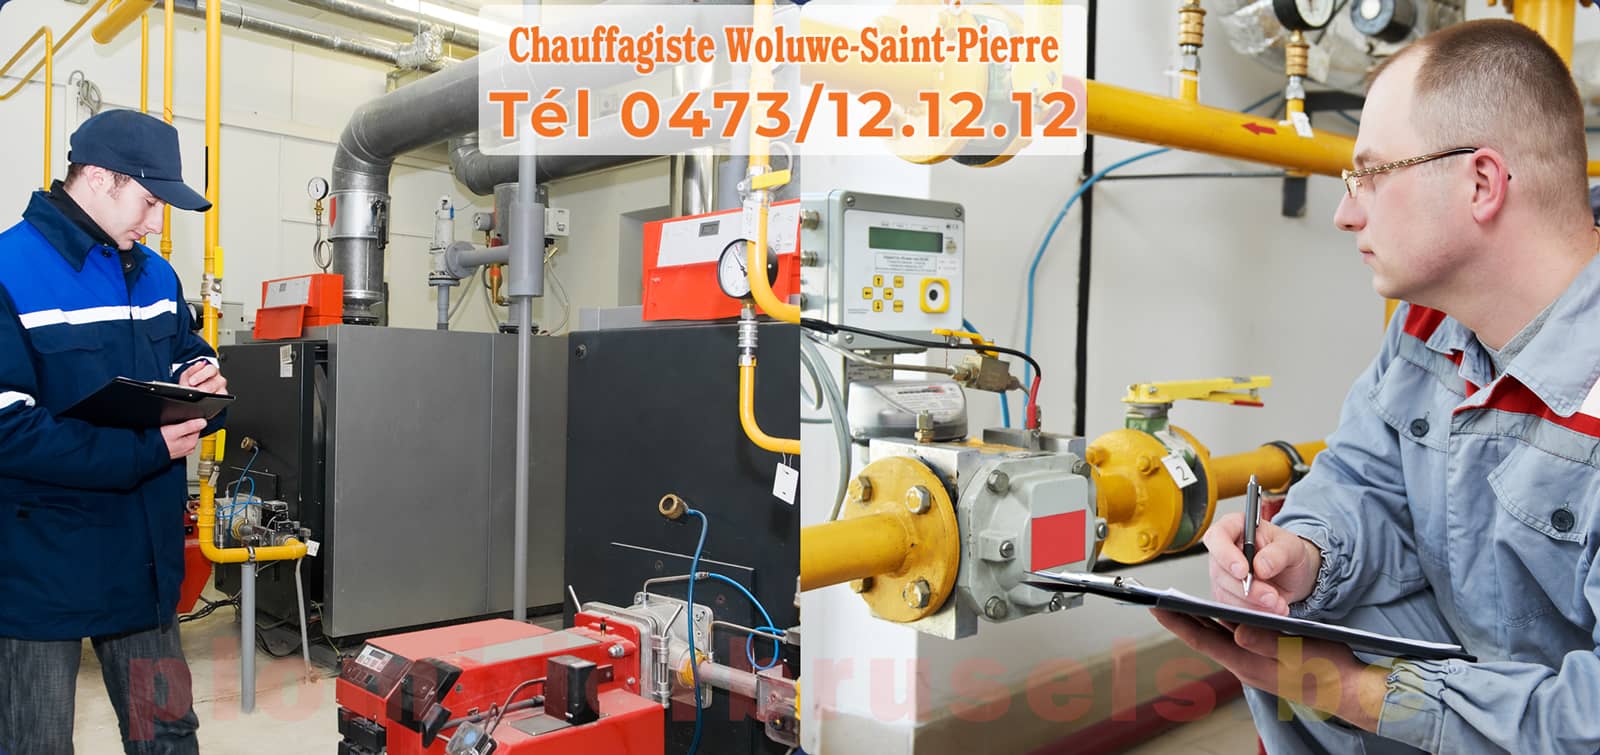 Chauffagiste Woluwe-Saint-Pierre service de Chauffage tél 0473/12.12.12